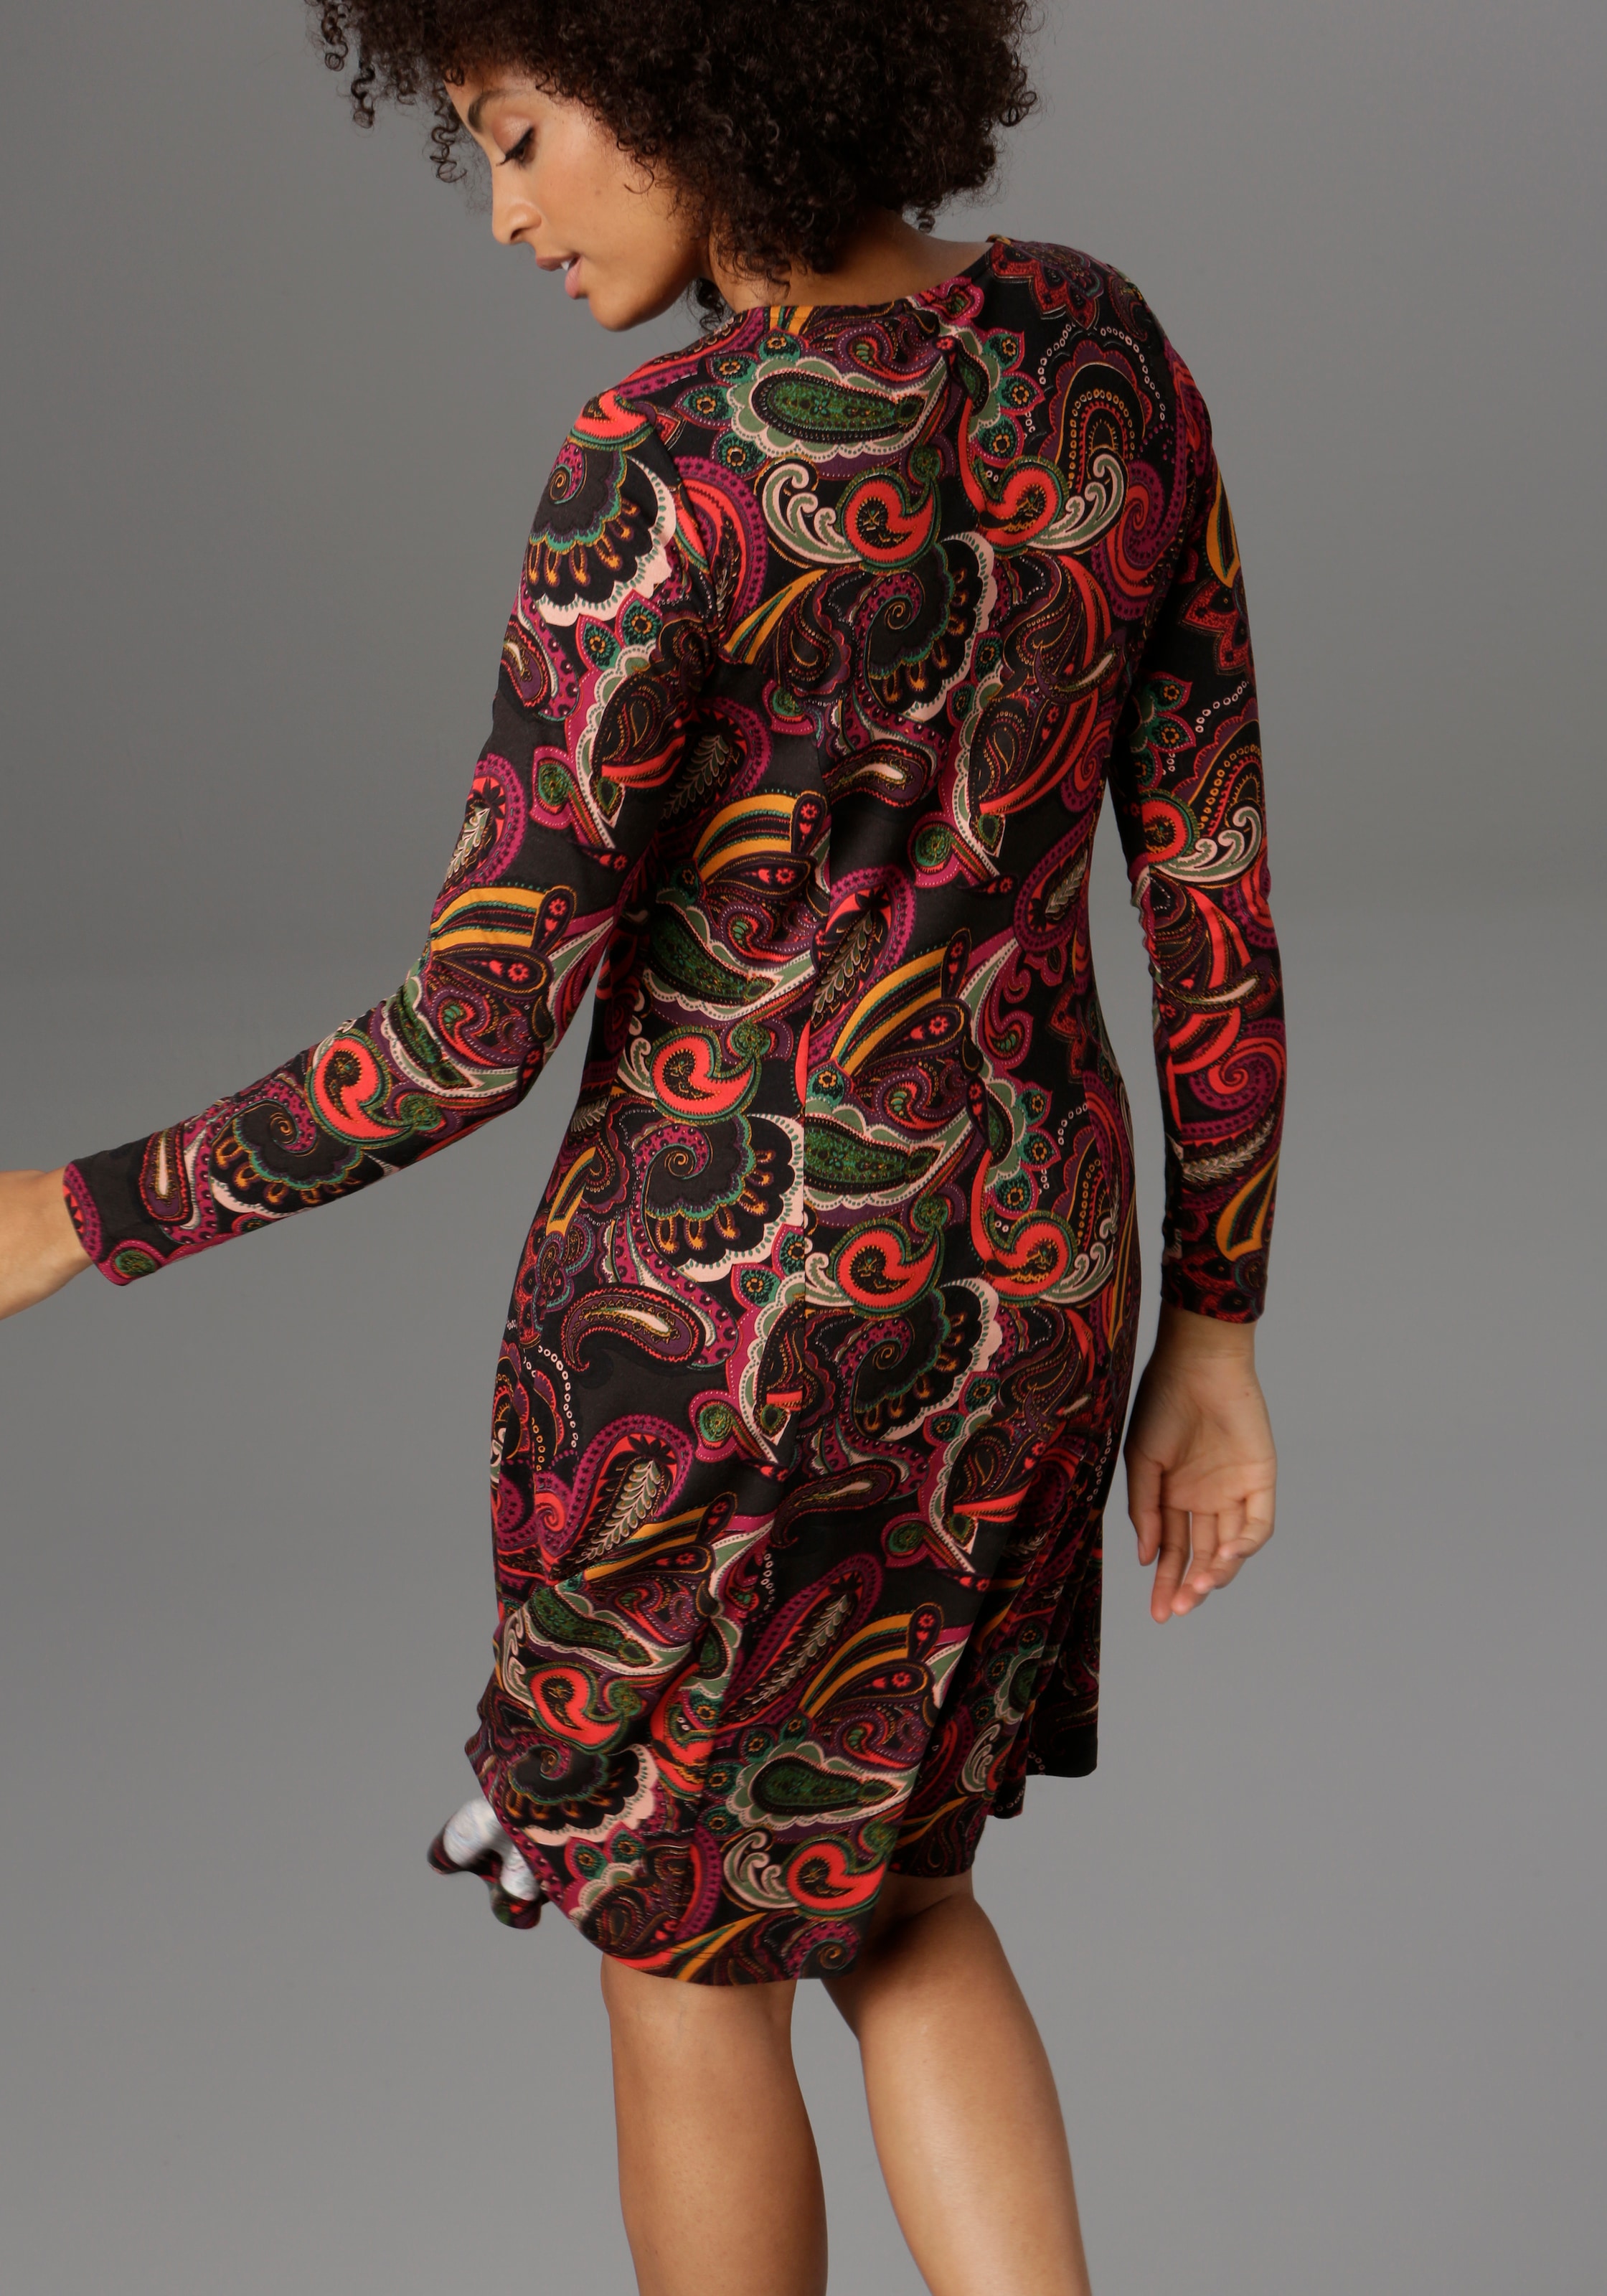 Paisley-Druck Jerseykleid, in SELECTED Farben bei Aniston satten